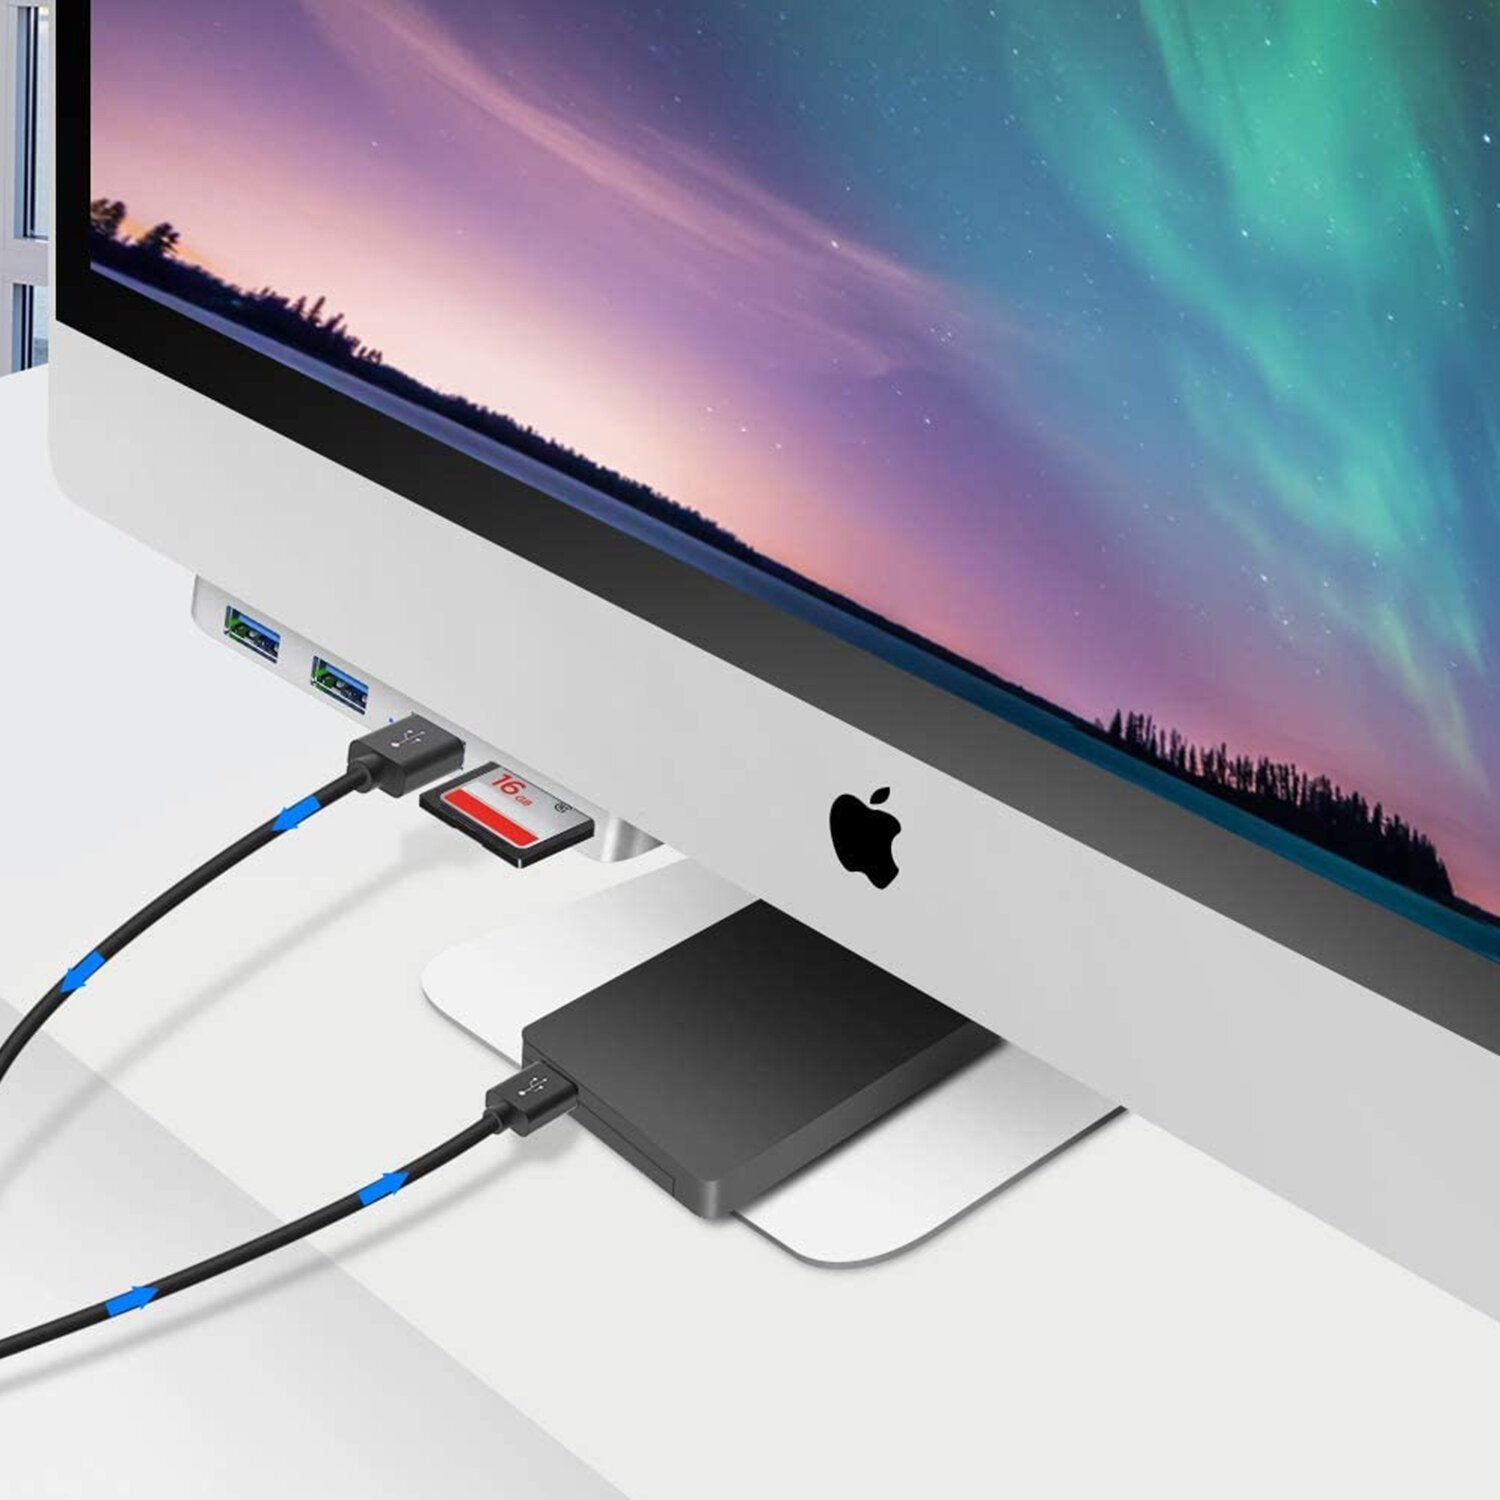 USB-C Hub Docking Station Adapter with 2*USB 3.0 1*USB-C 1*Micro SD 1*SD for iMac Pro 20171820